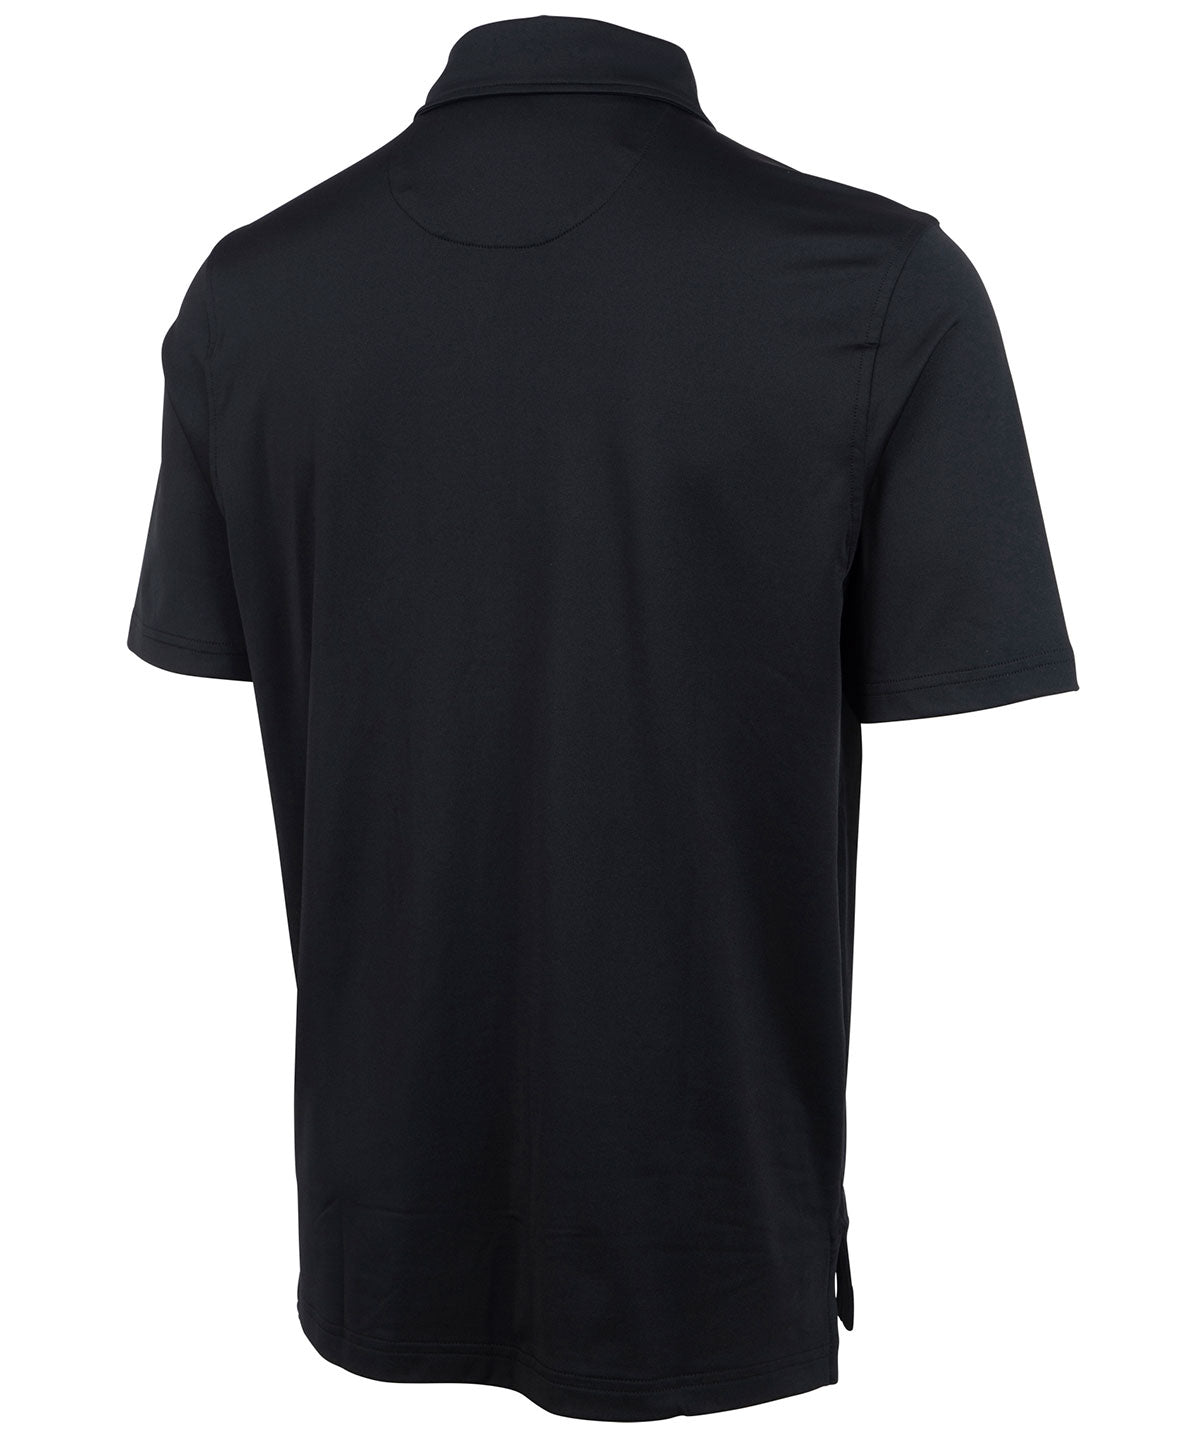 Performance Brushed-Back Stretch Jersey Cabana Sport Shirt